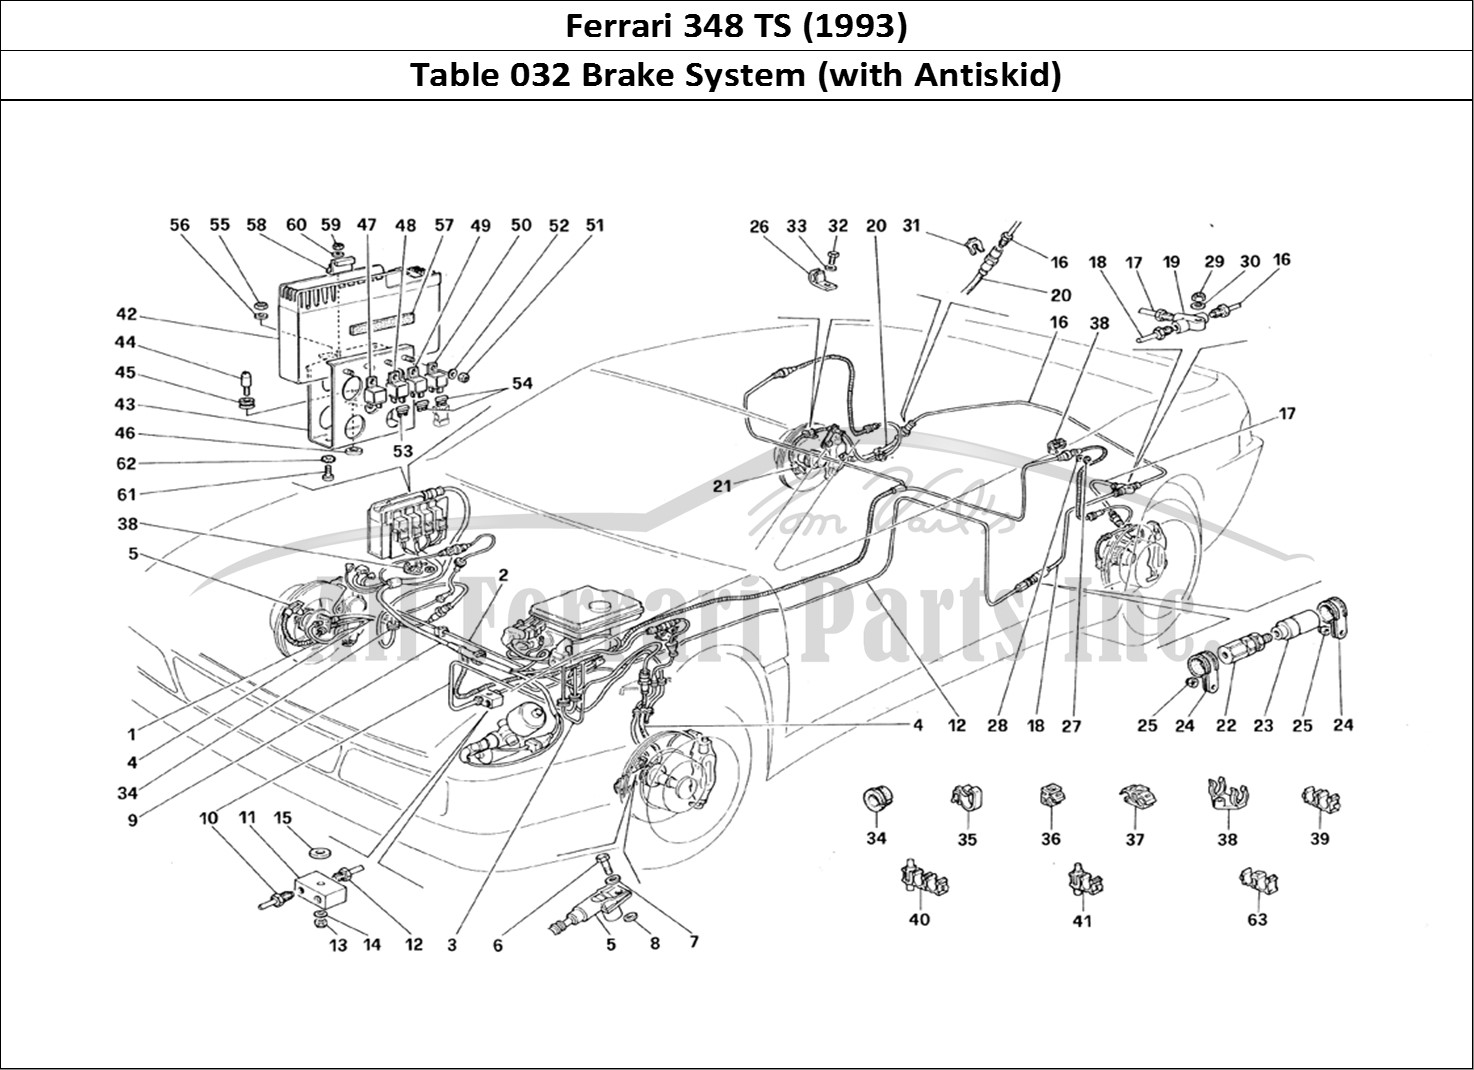 Ferrari Parts Ferrari 348 TB (1993) Page 032 Brake System (With Antisk